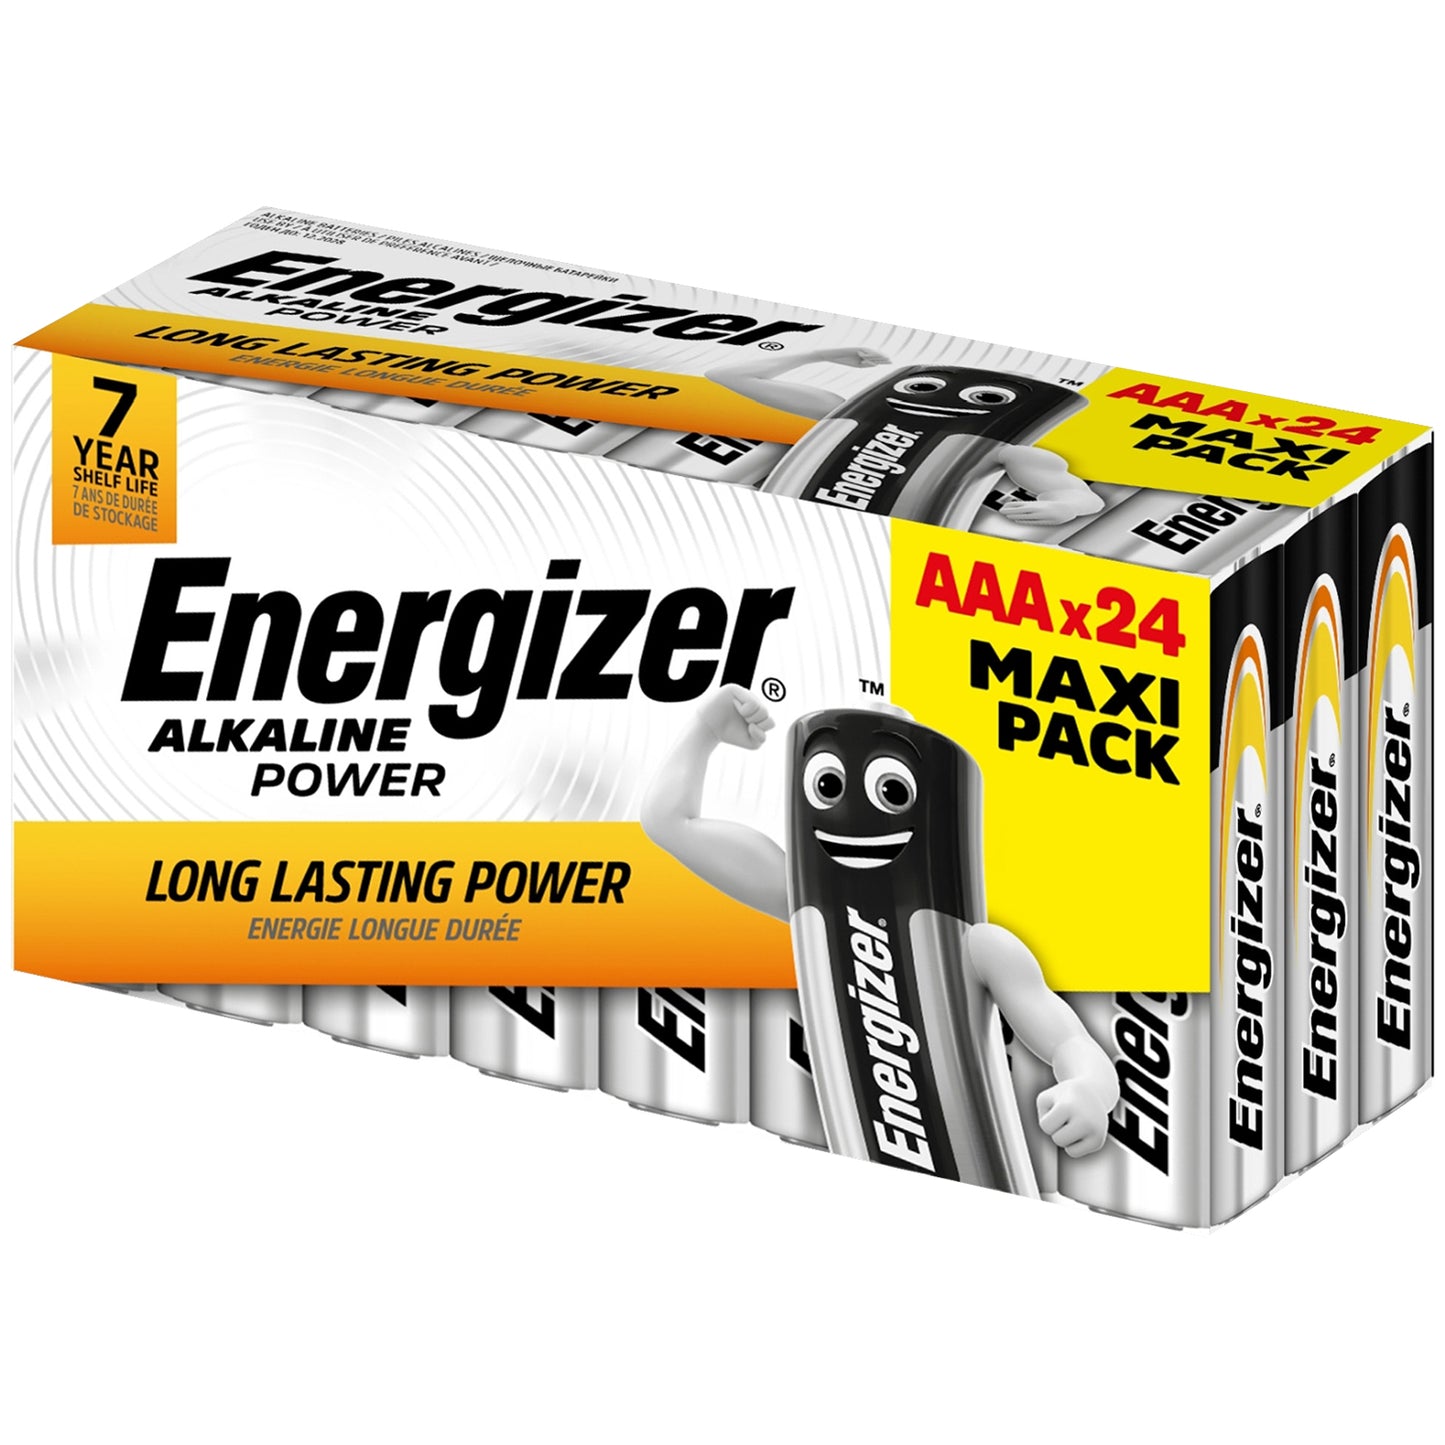 Energizer Power Alkaline AAA Batteries - Pack of 24